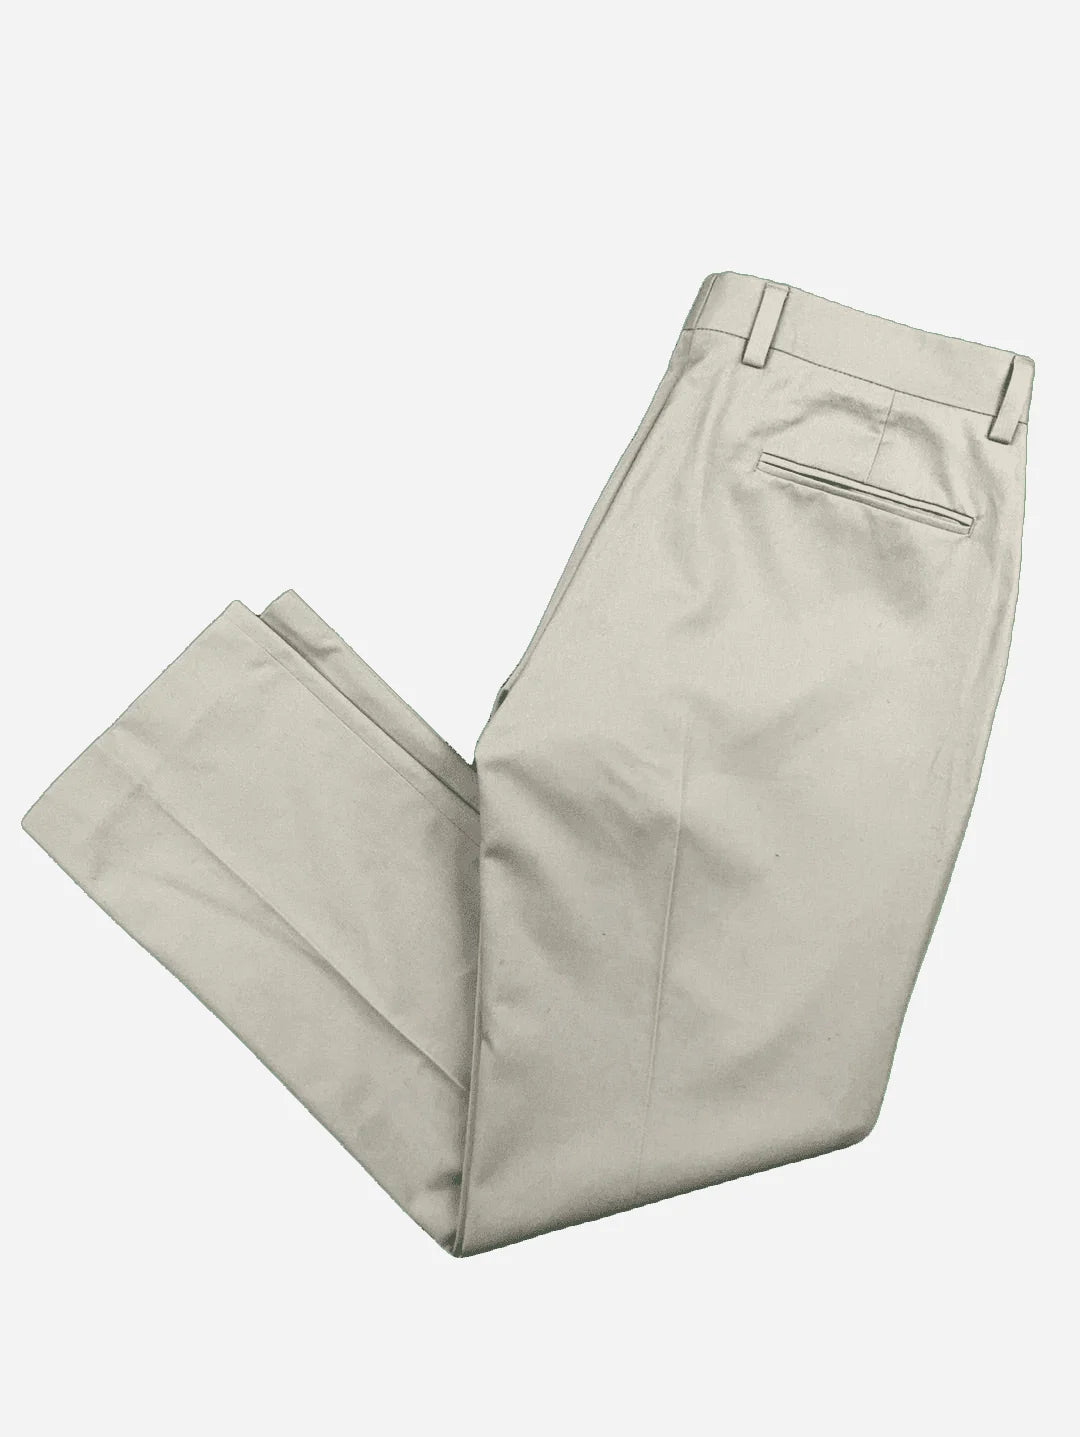 Dressman trousers 34/30 (M)